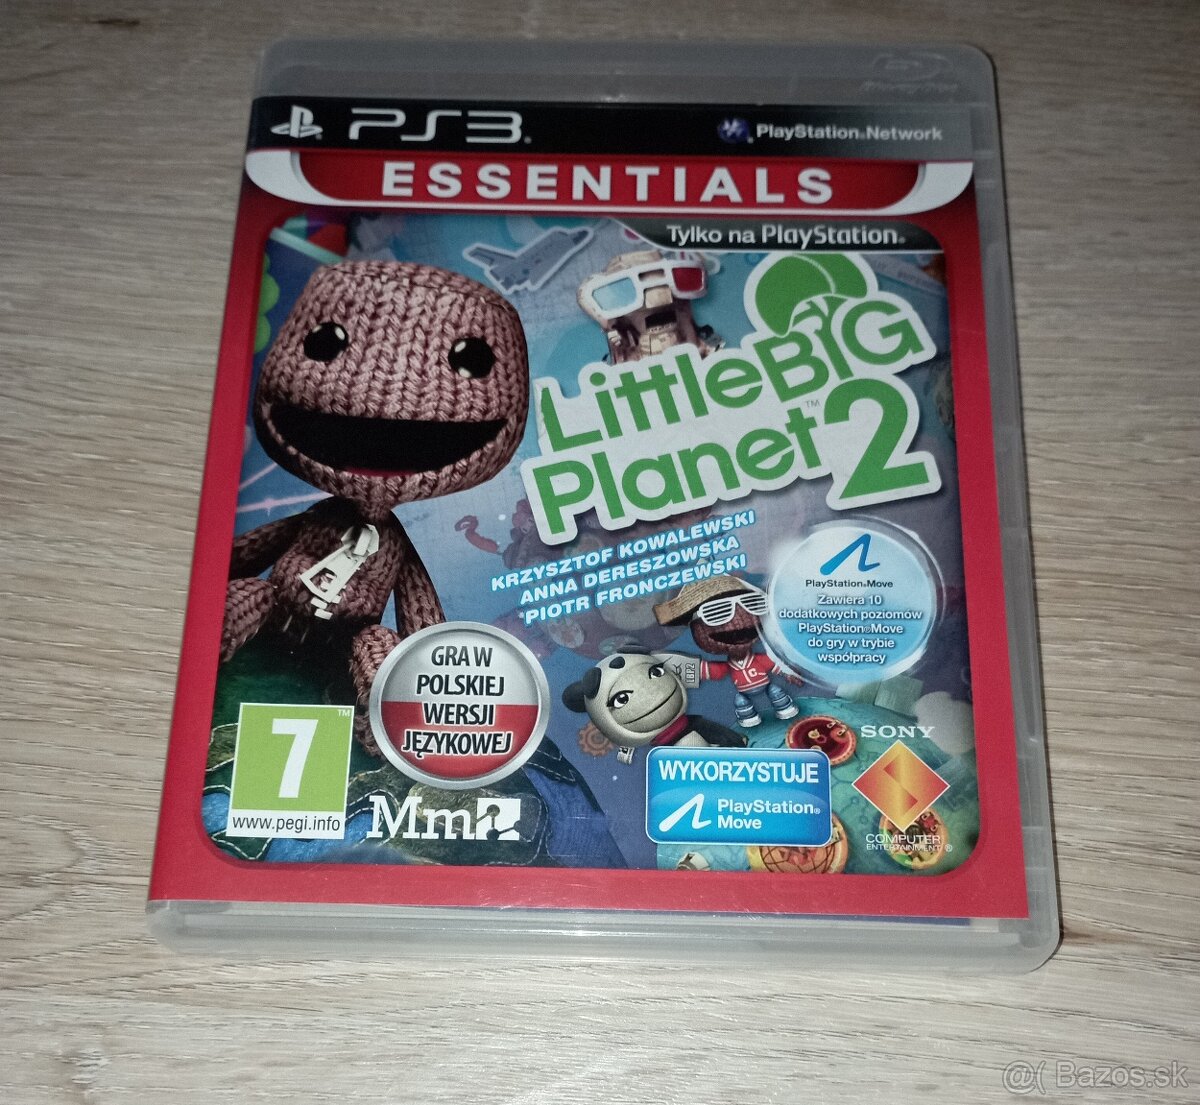 Little Big Planet 2 PS3